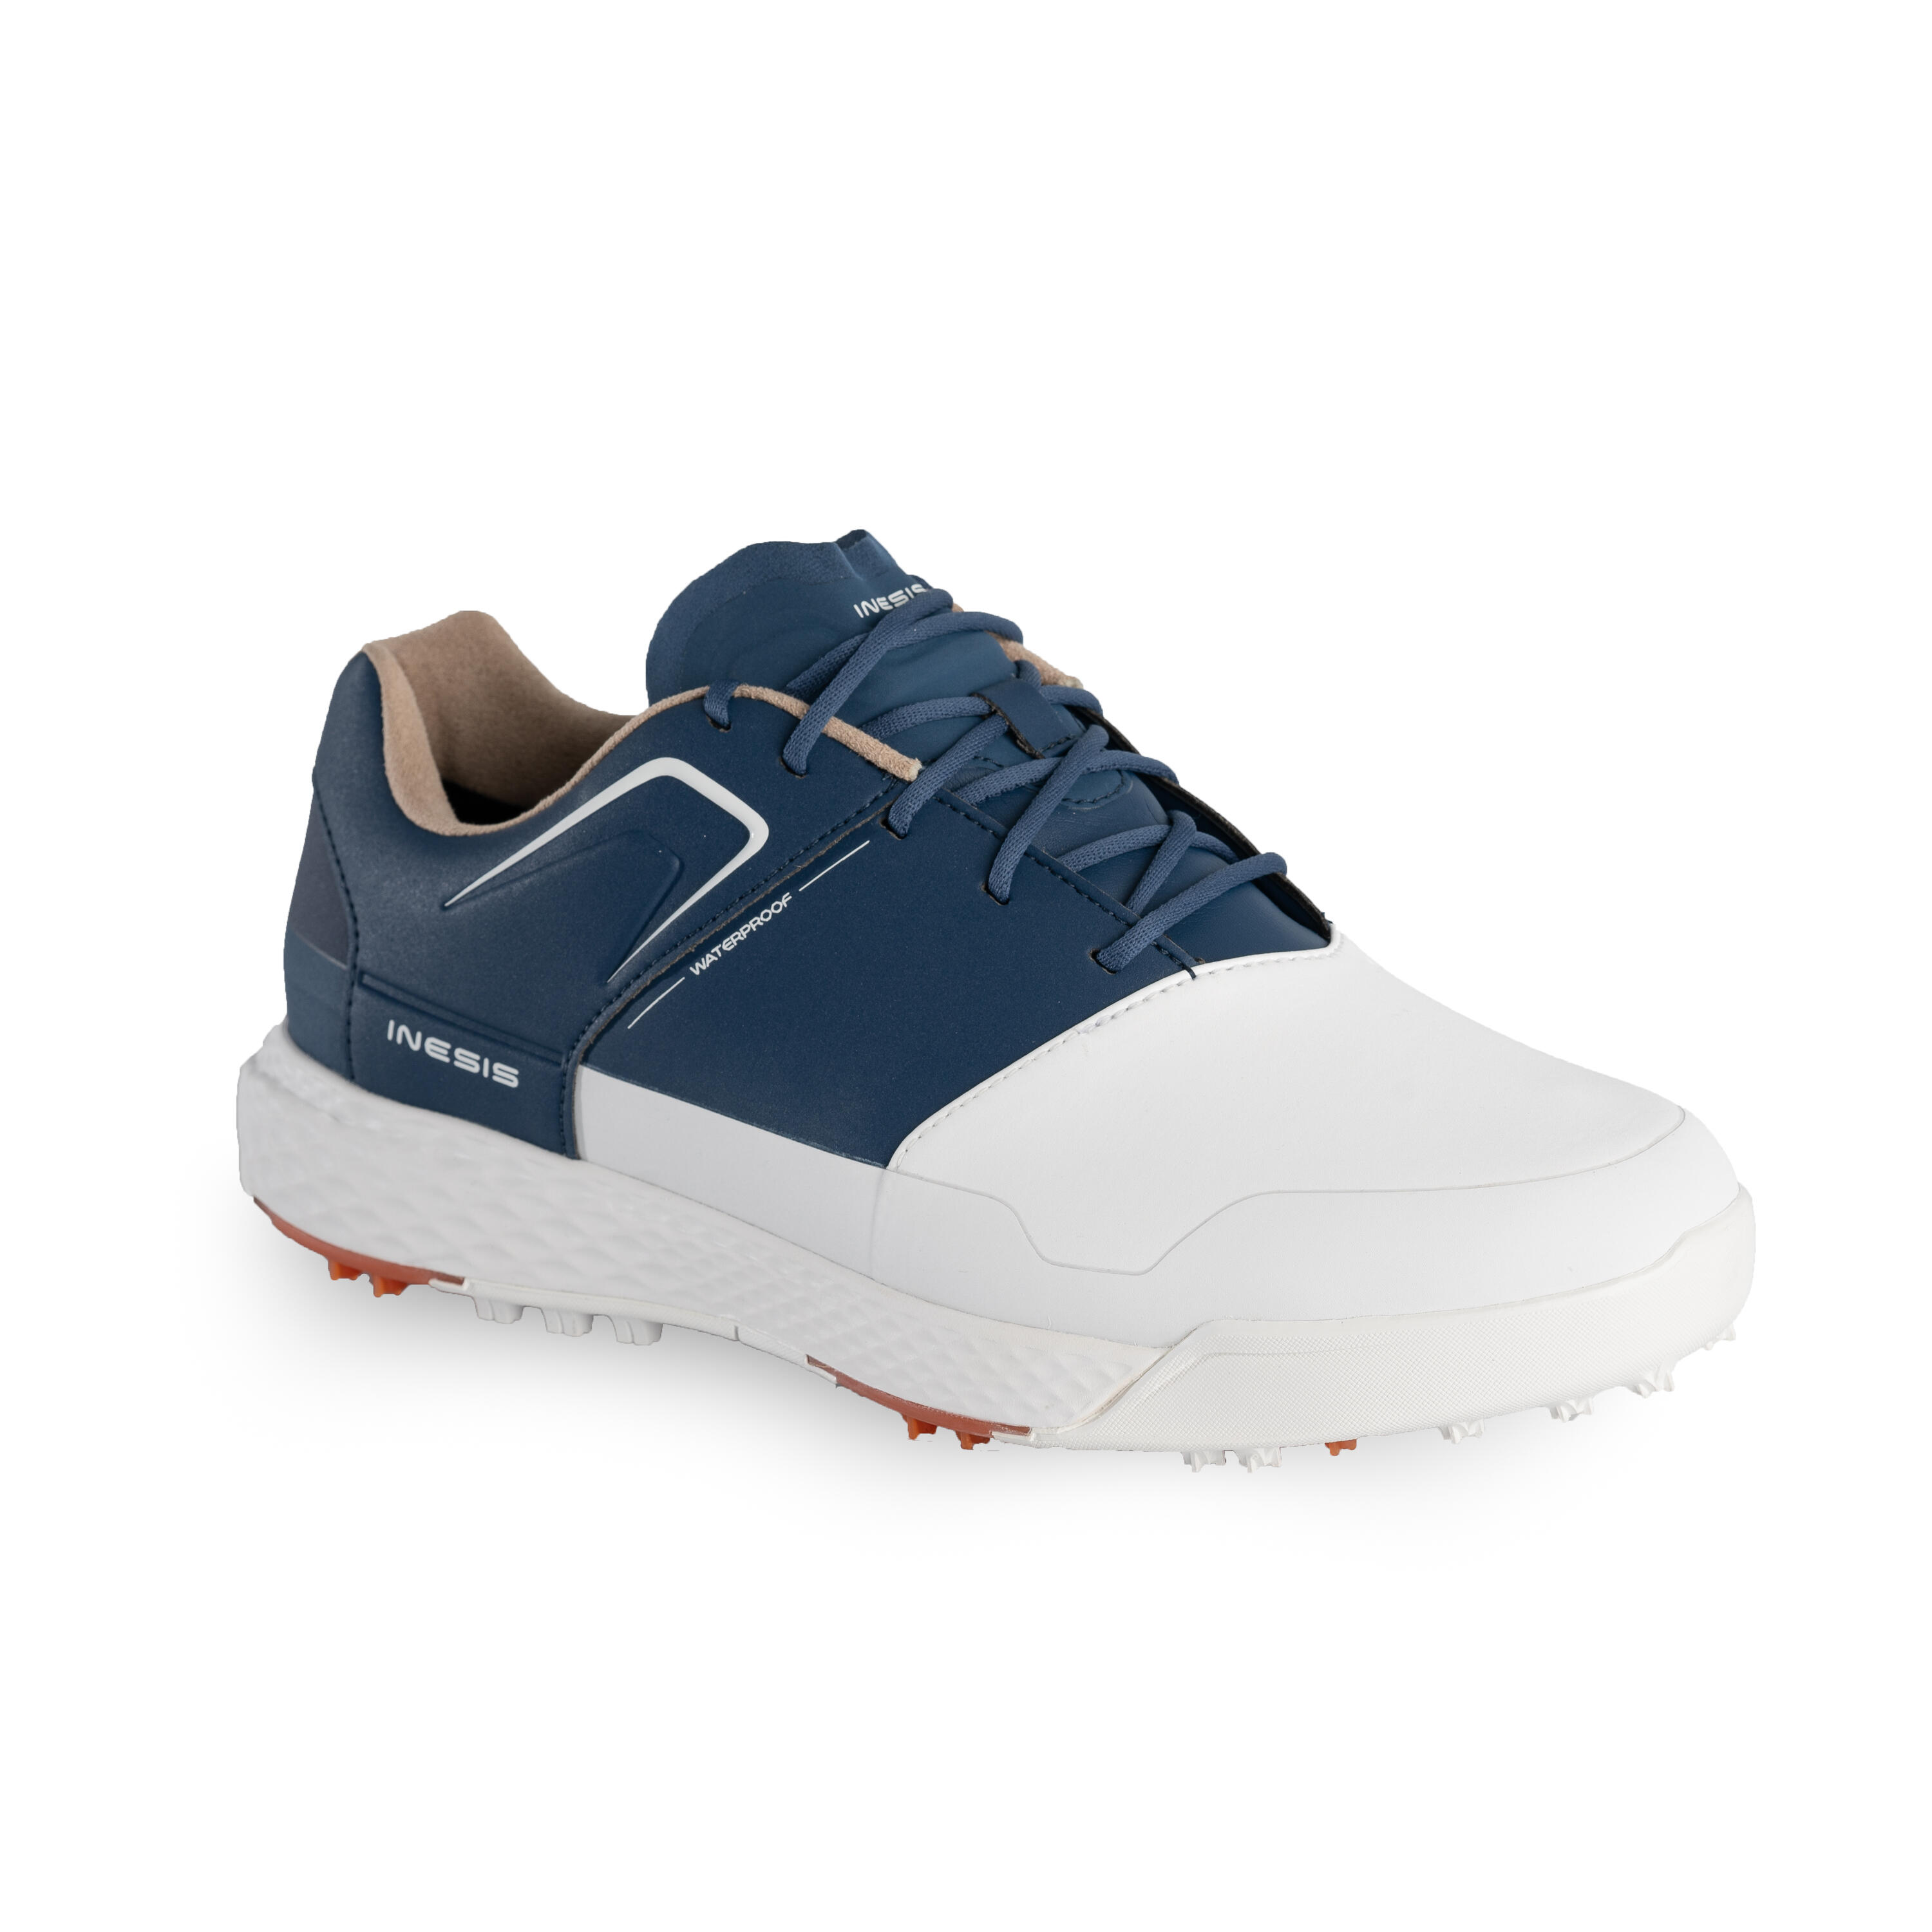 INESIS Men's golf waterproof grip shoes - white and blue